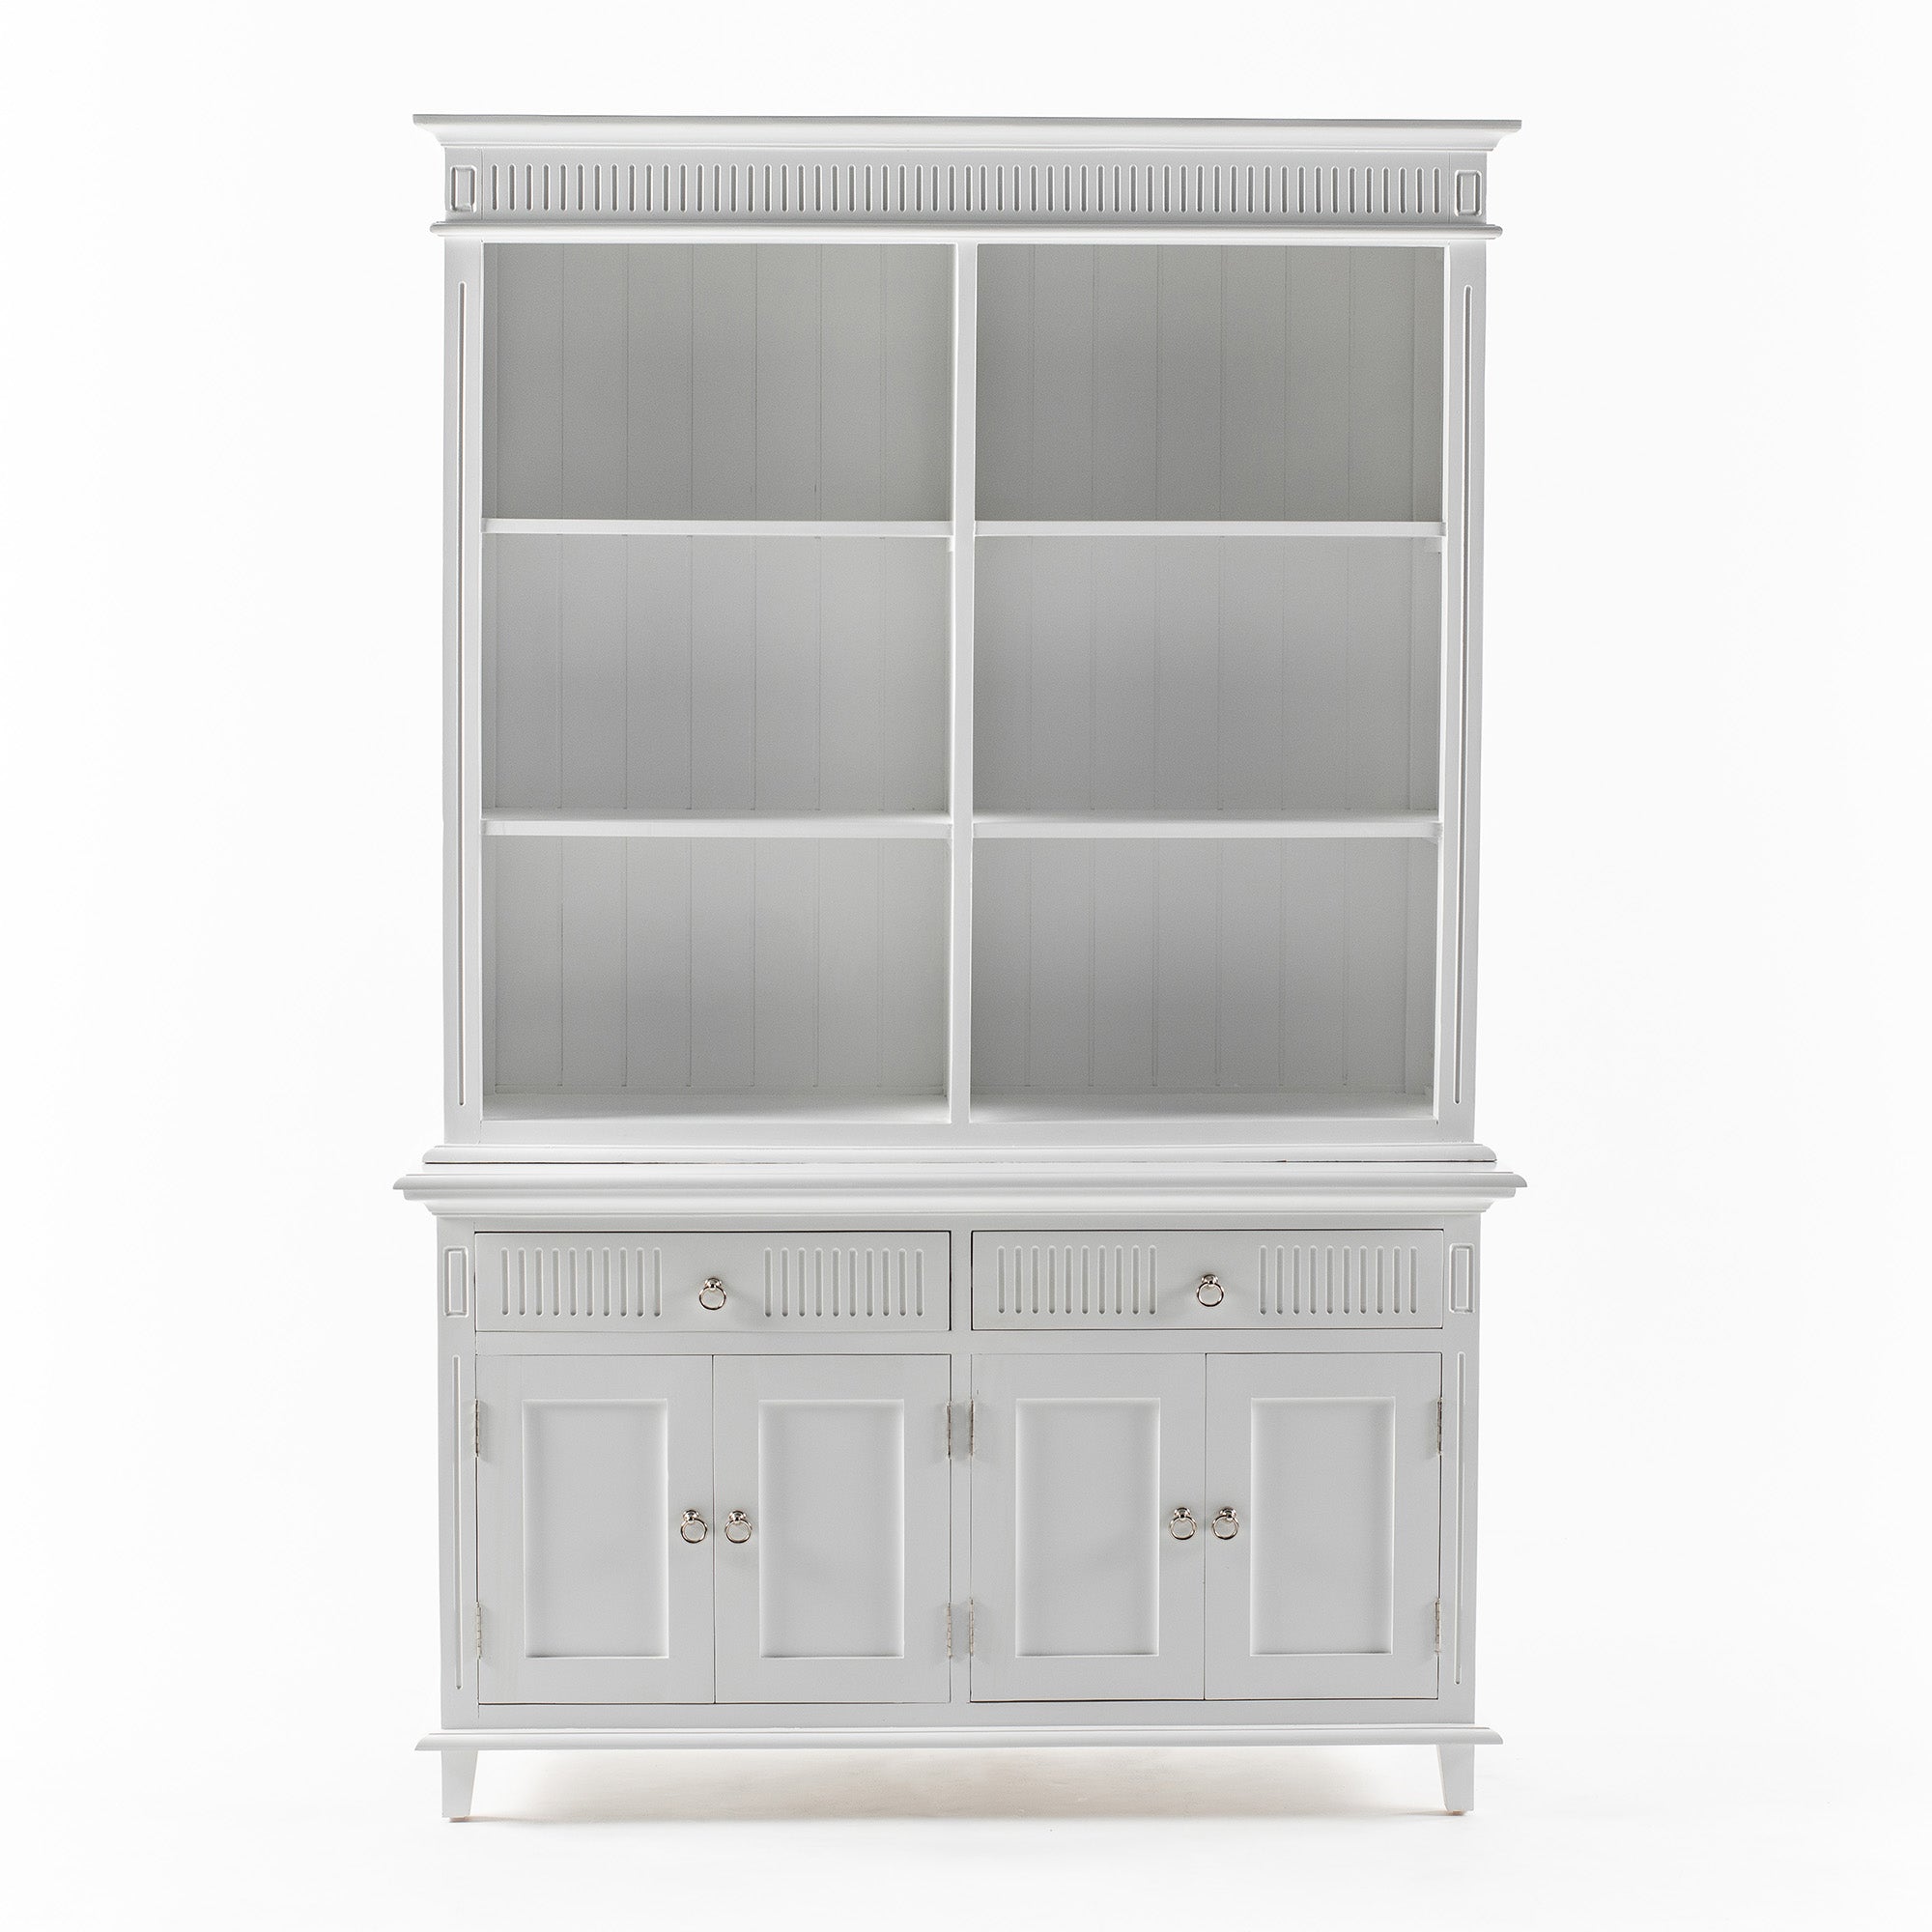 Skansen Nordic Design Classic White Hutch Unit with 6 Shelves